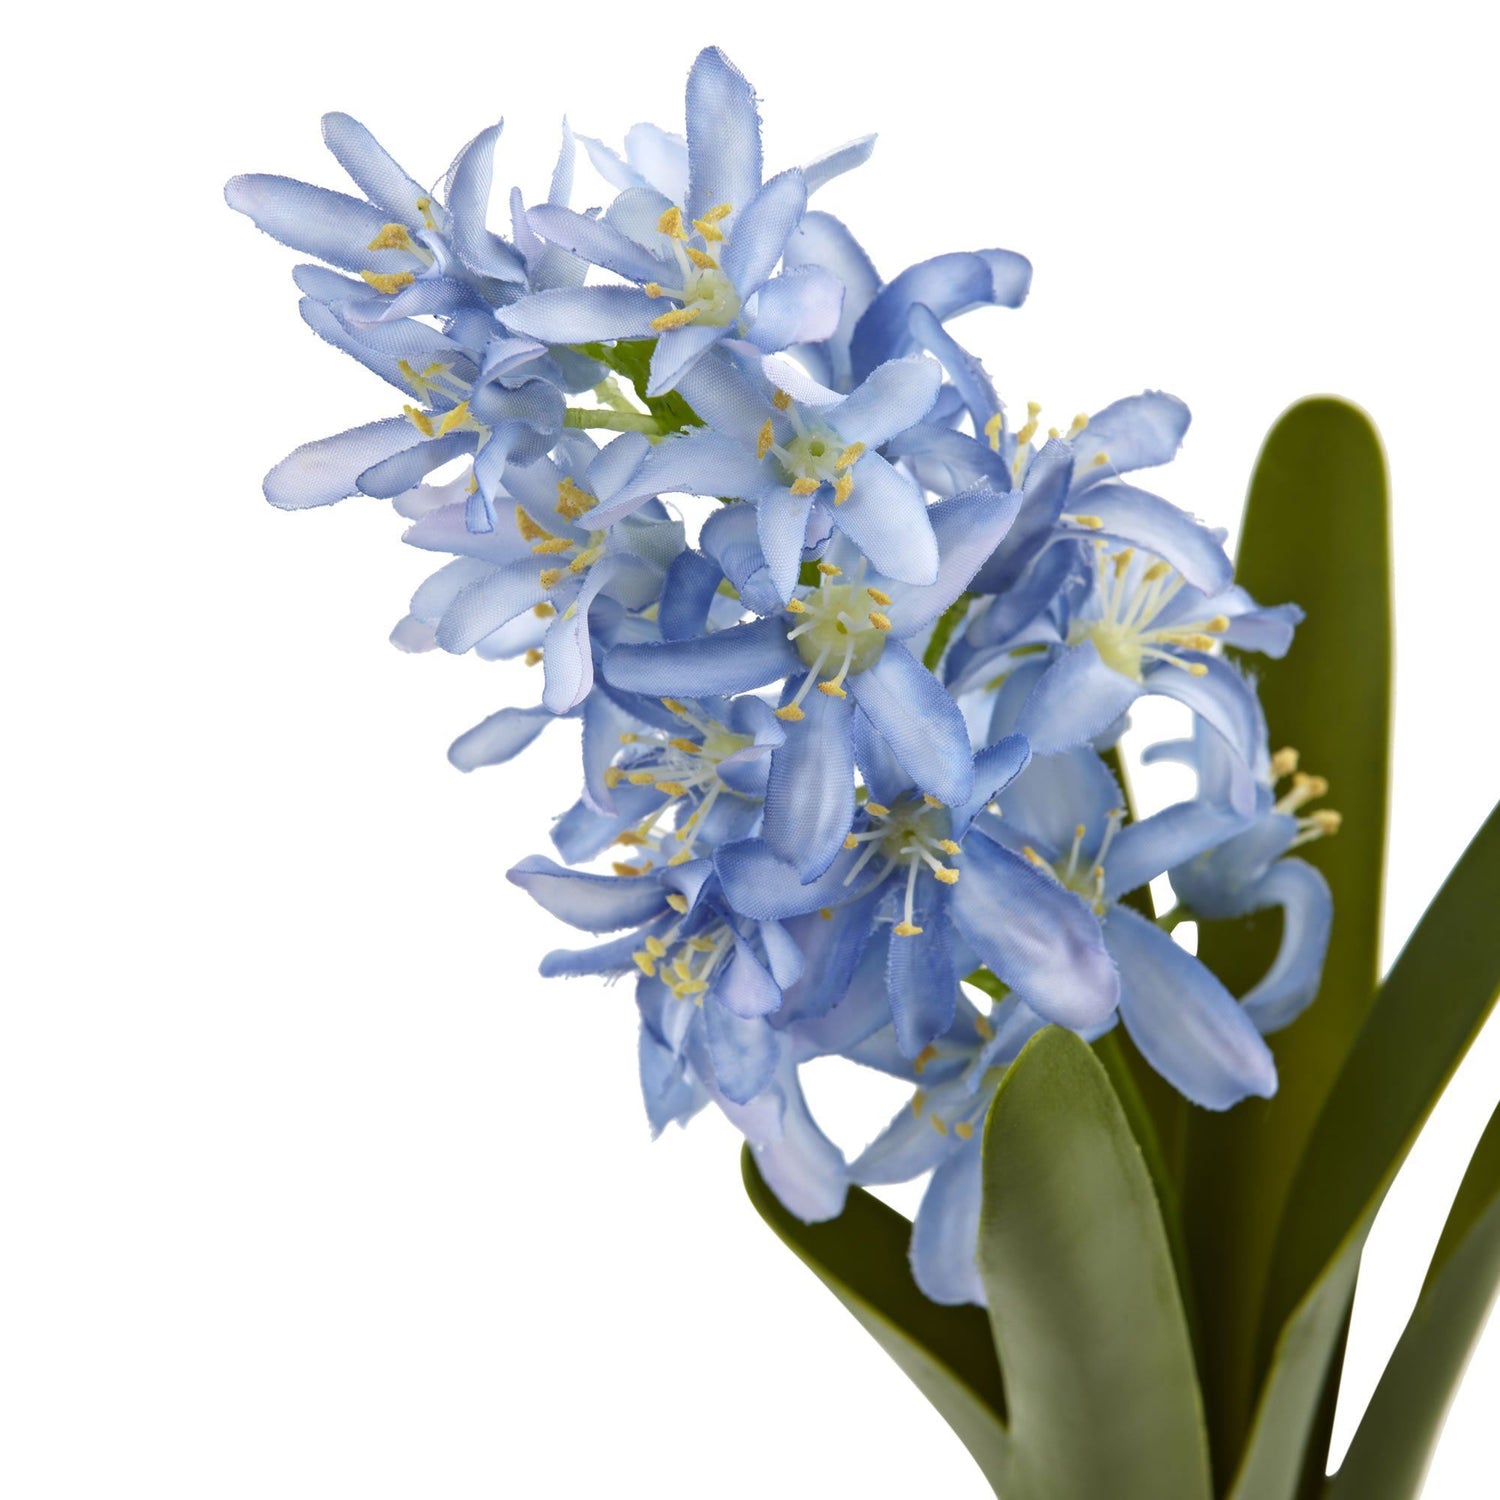 13” Hyacinth Artificial Flower (Set of 4)